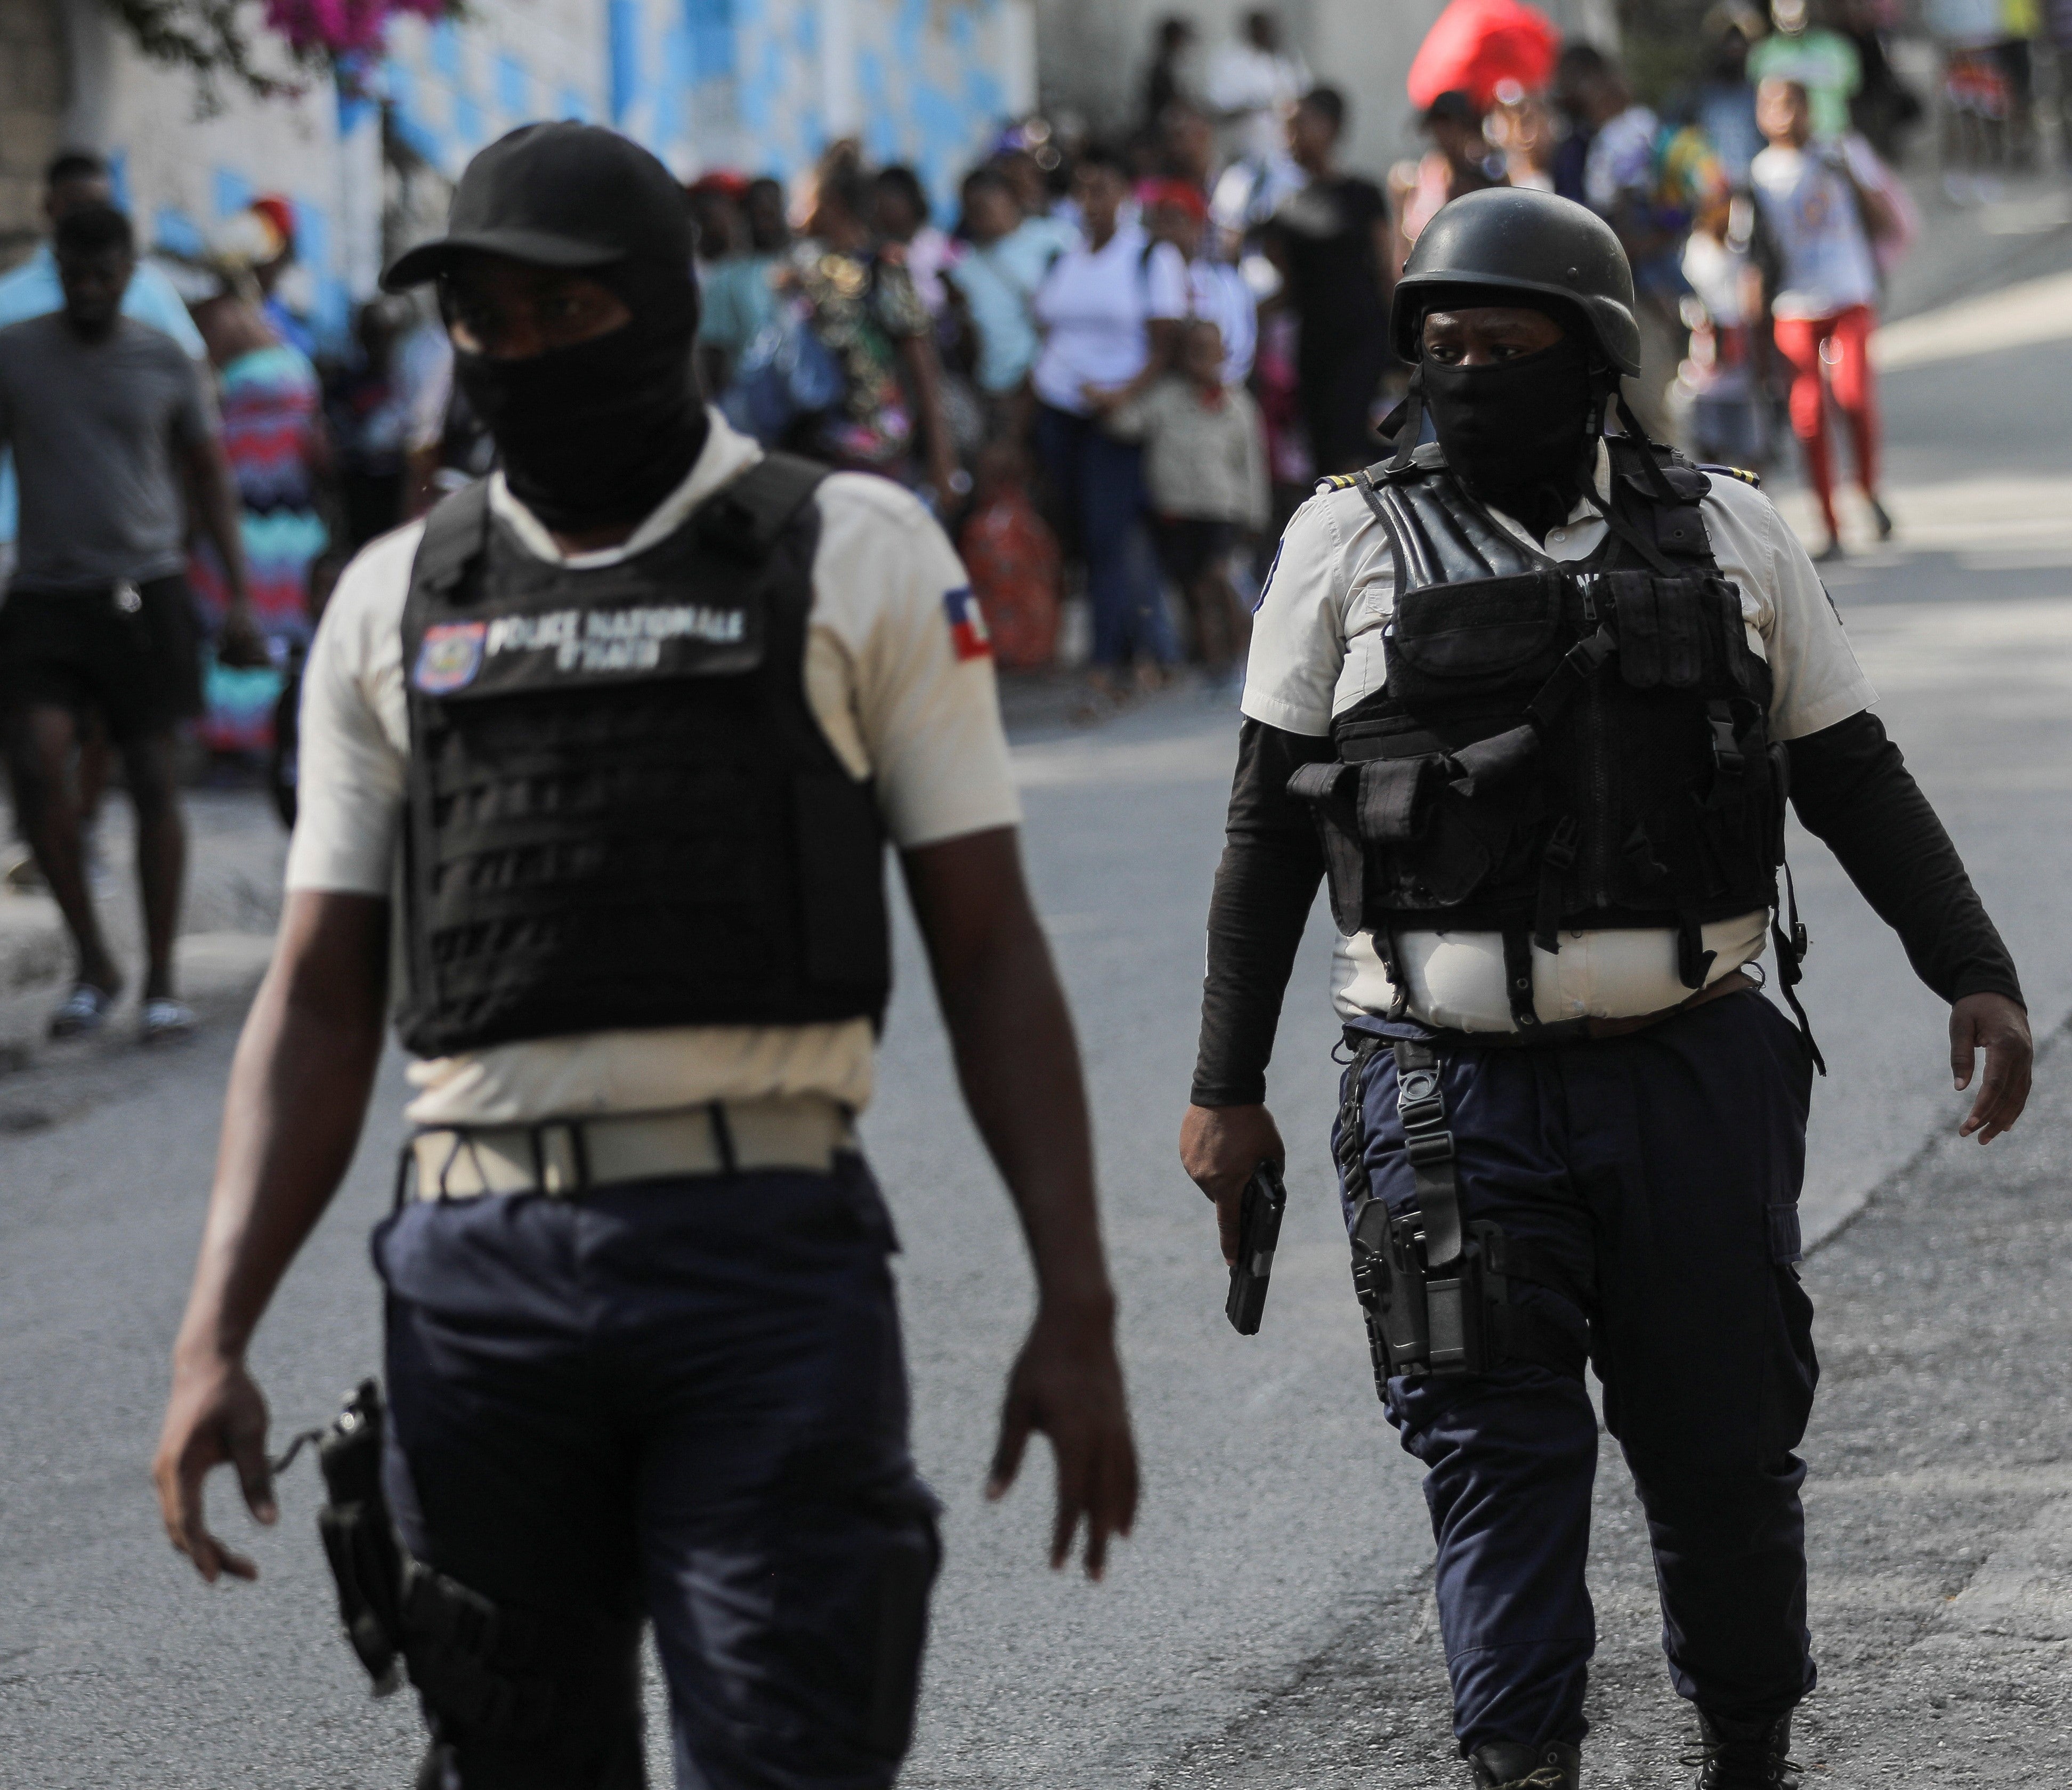 Haitian residents lynch suspected gang members